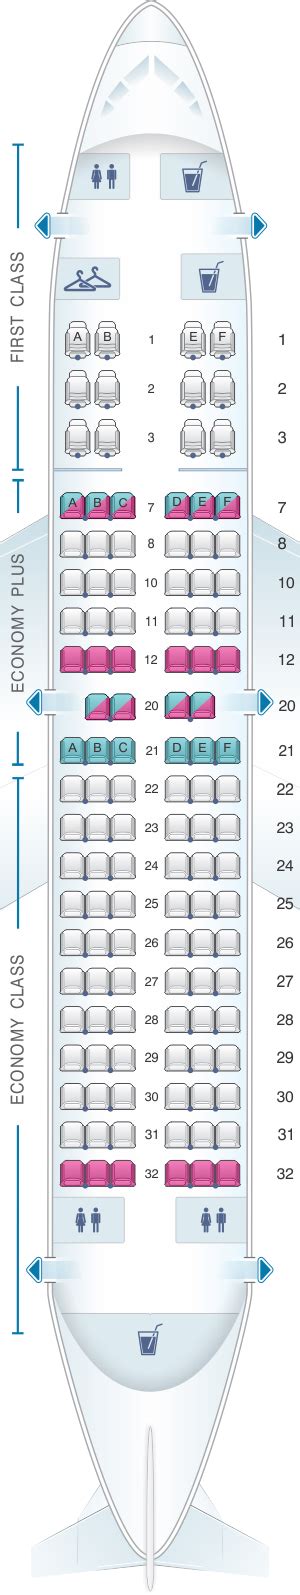 united 737 seating chart